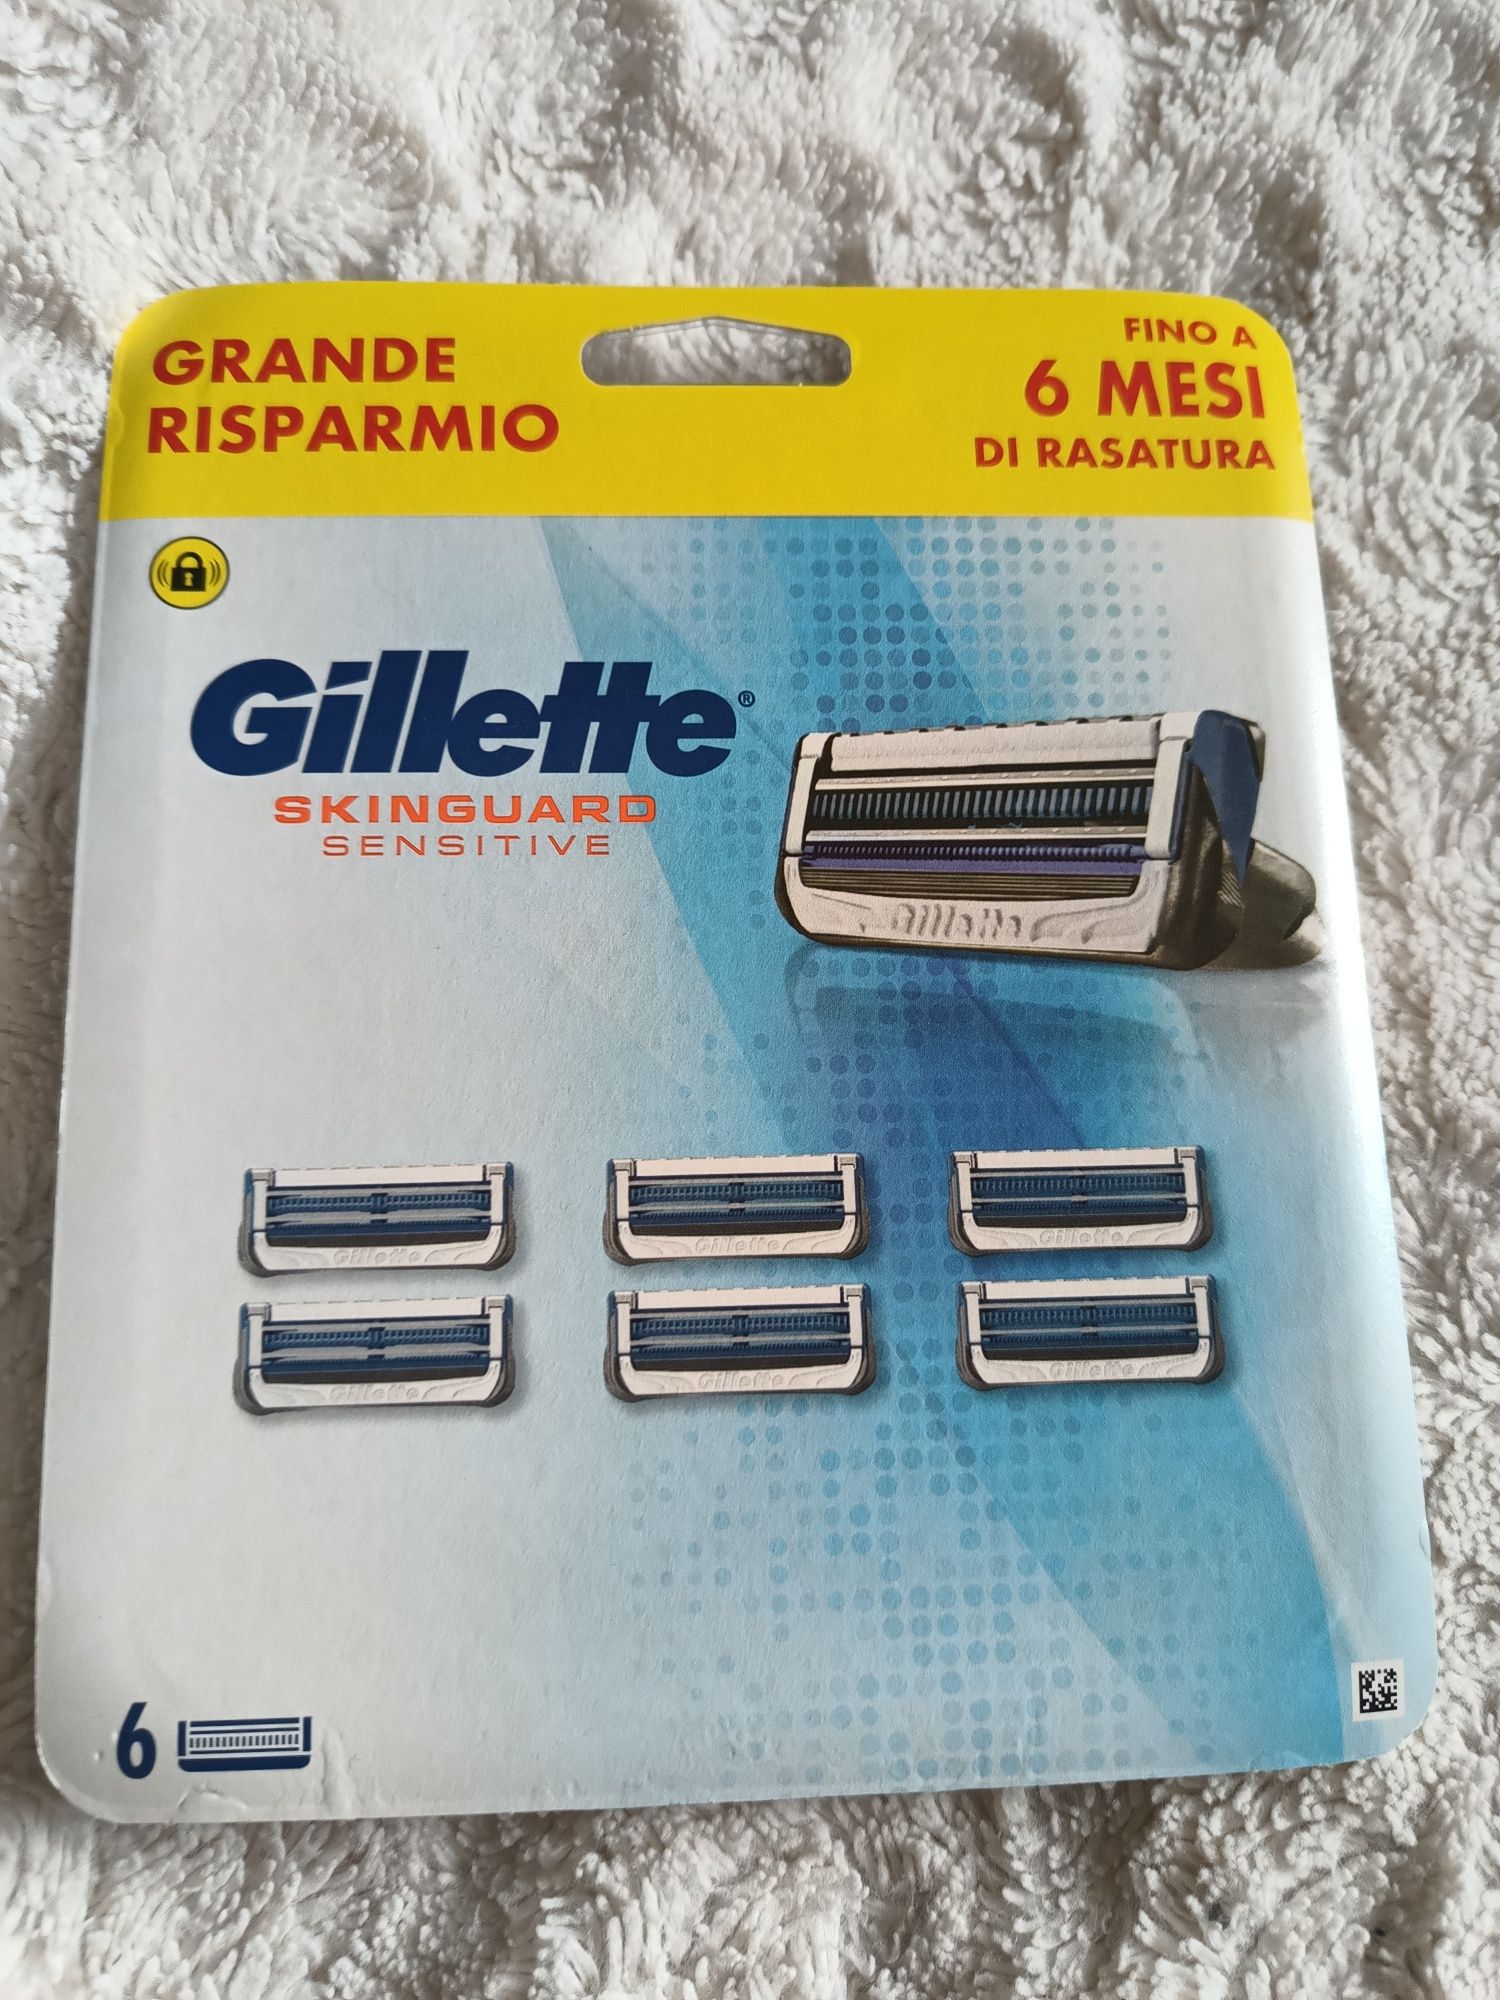 wkłady do golenia Gillette Skinguard sensitive.